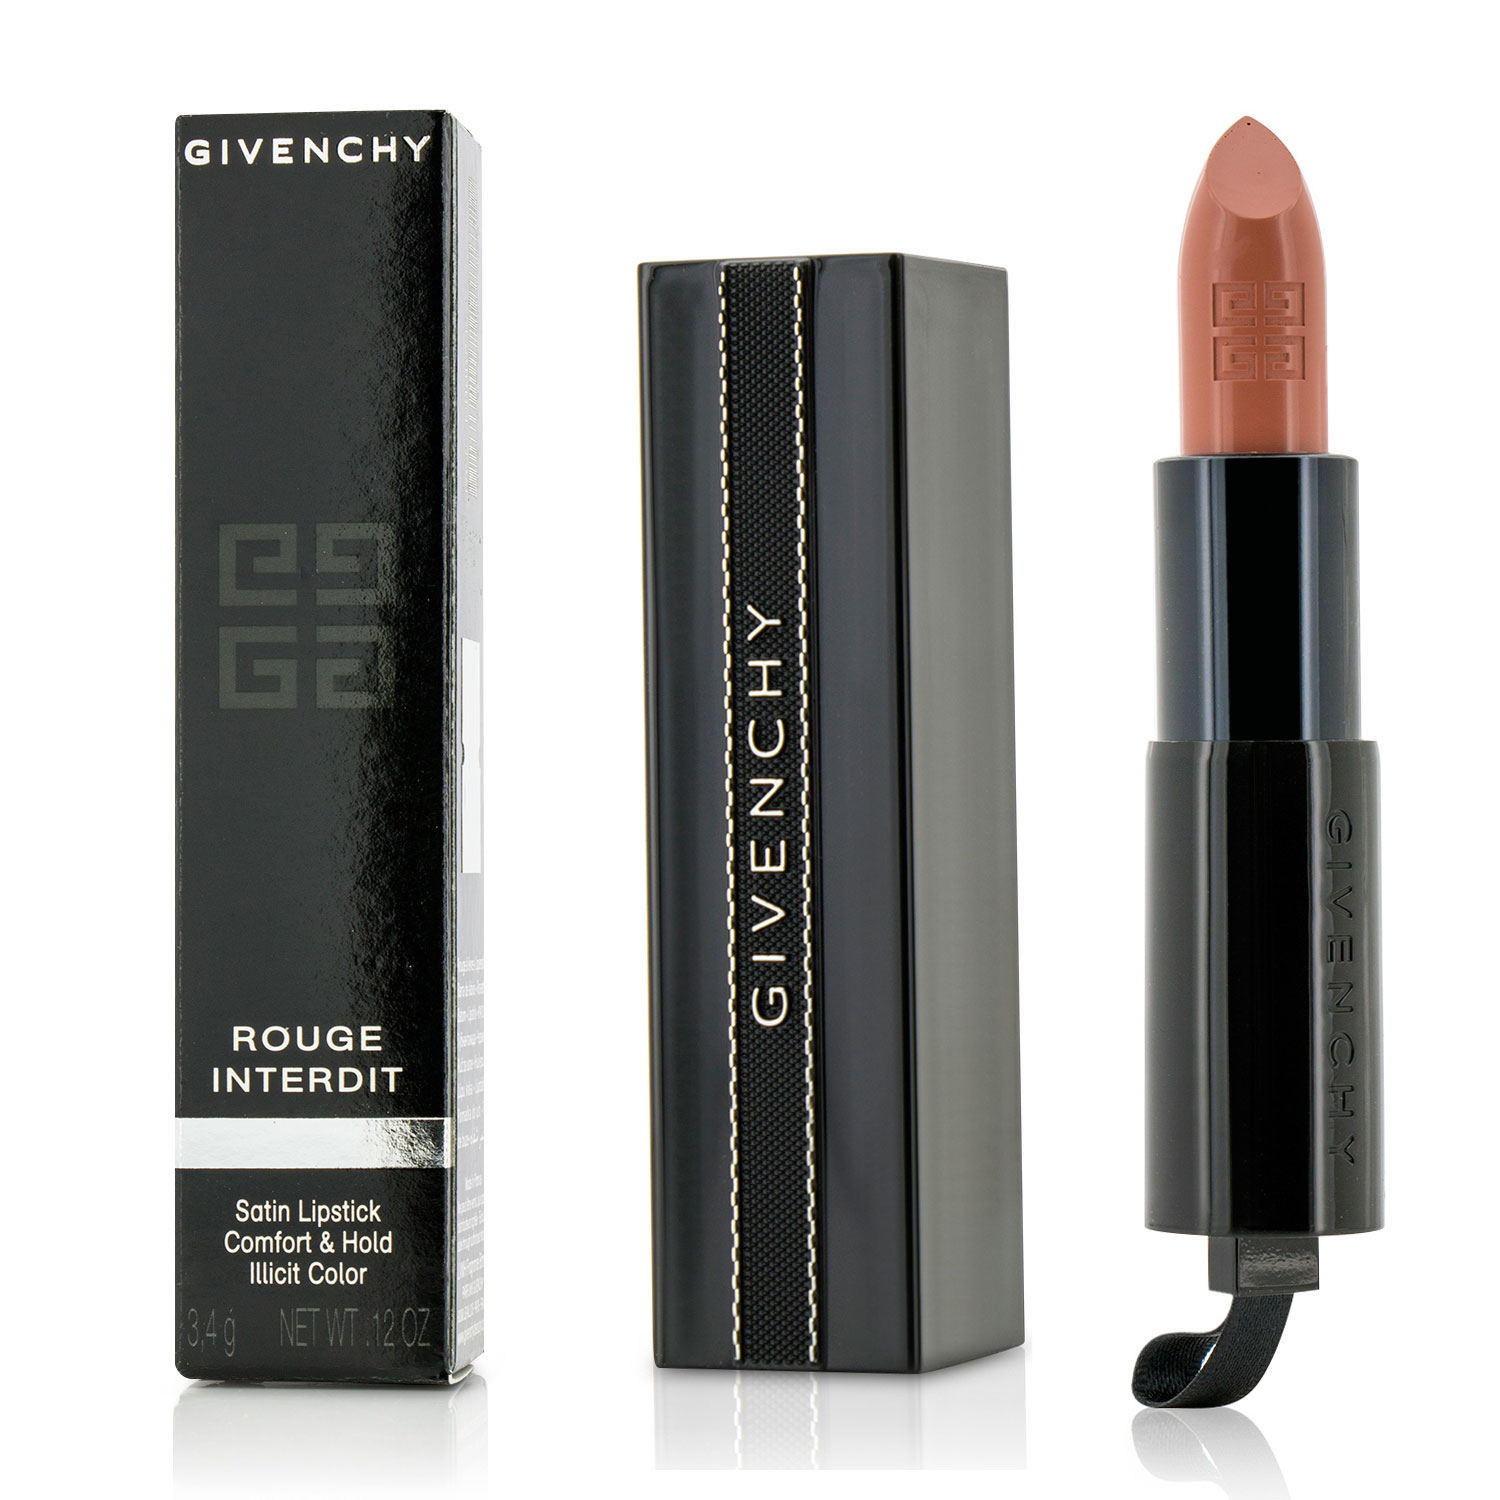 Rouge Interdit Satin Lipstick - # 3 Urban Nude Givenchy Image